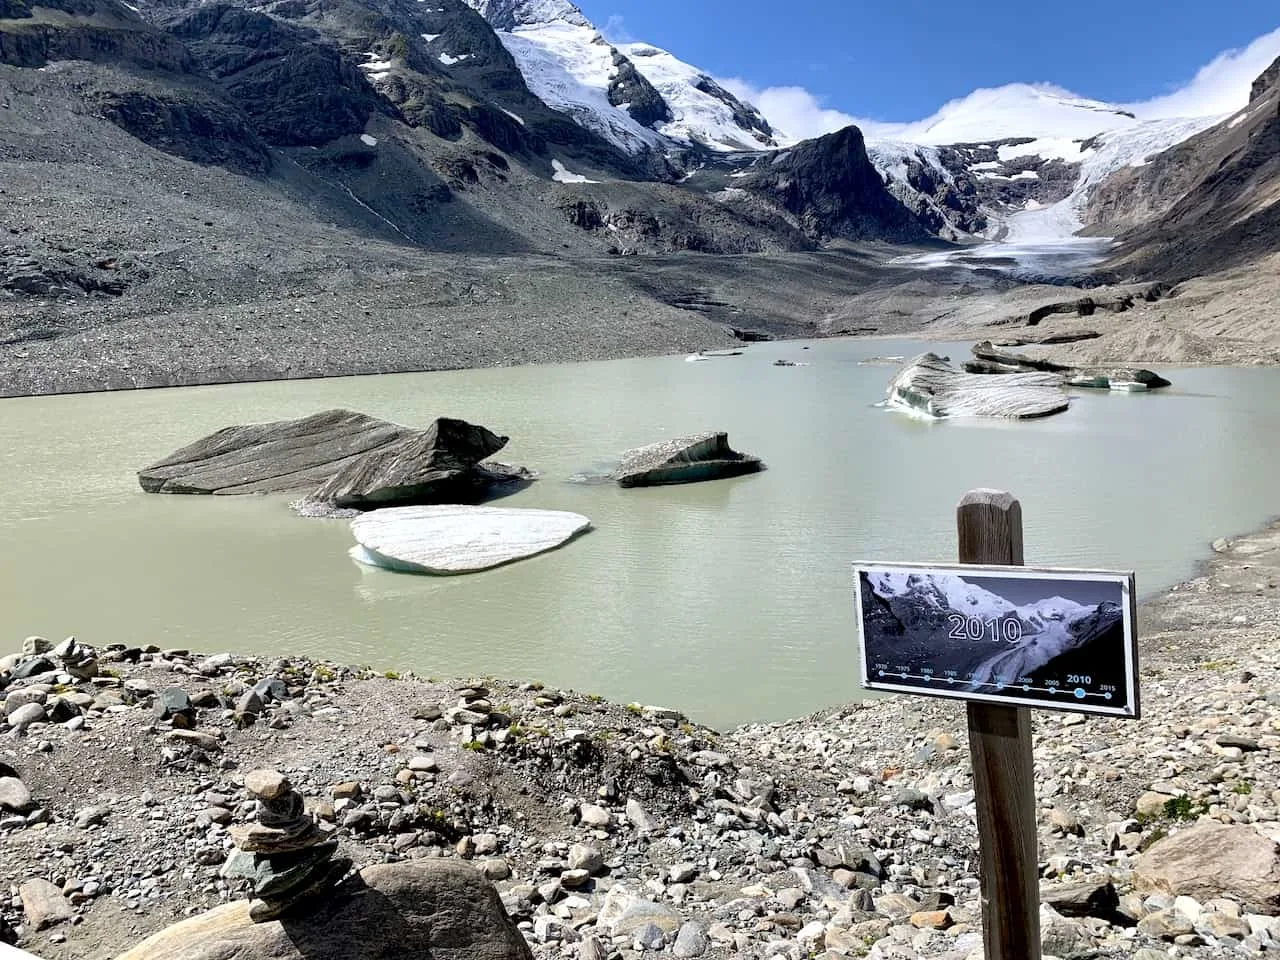 Pasterze Glacier Hiking Trail Sign